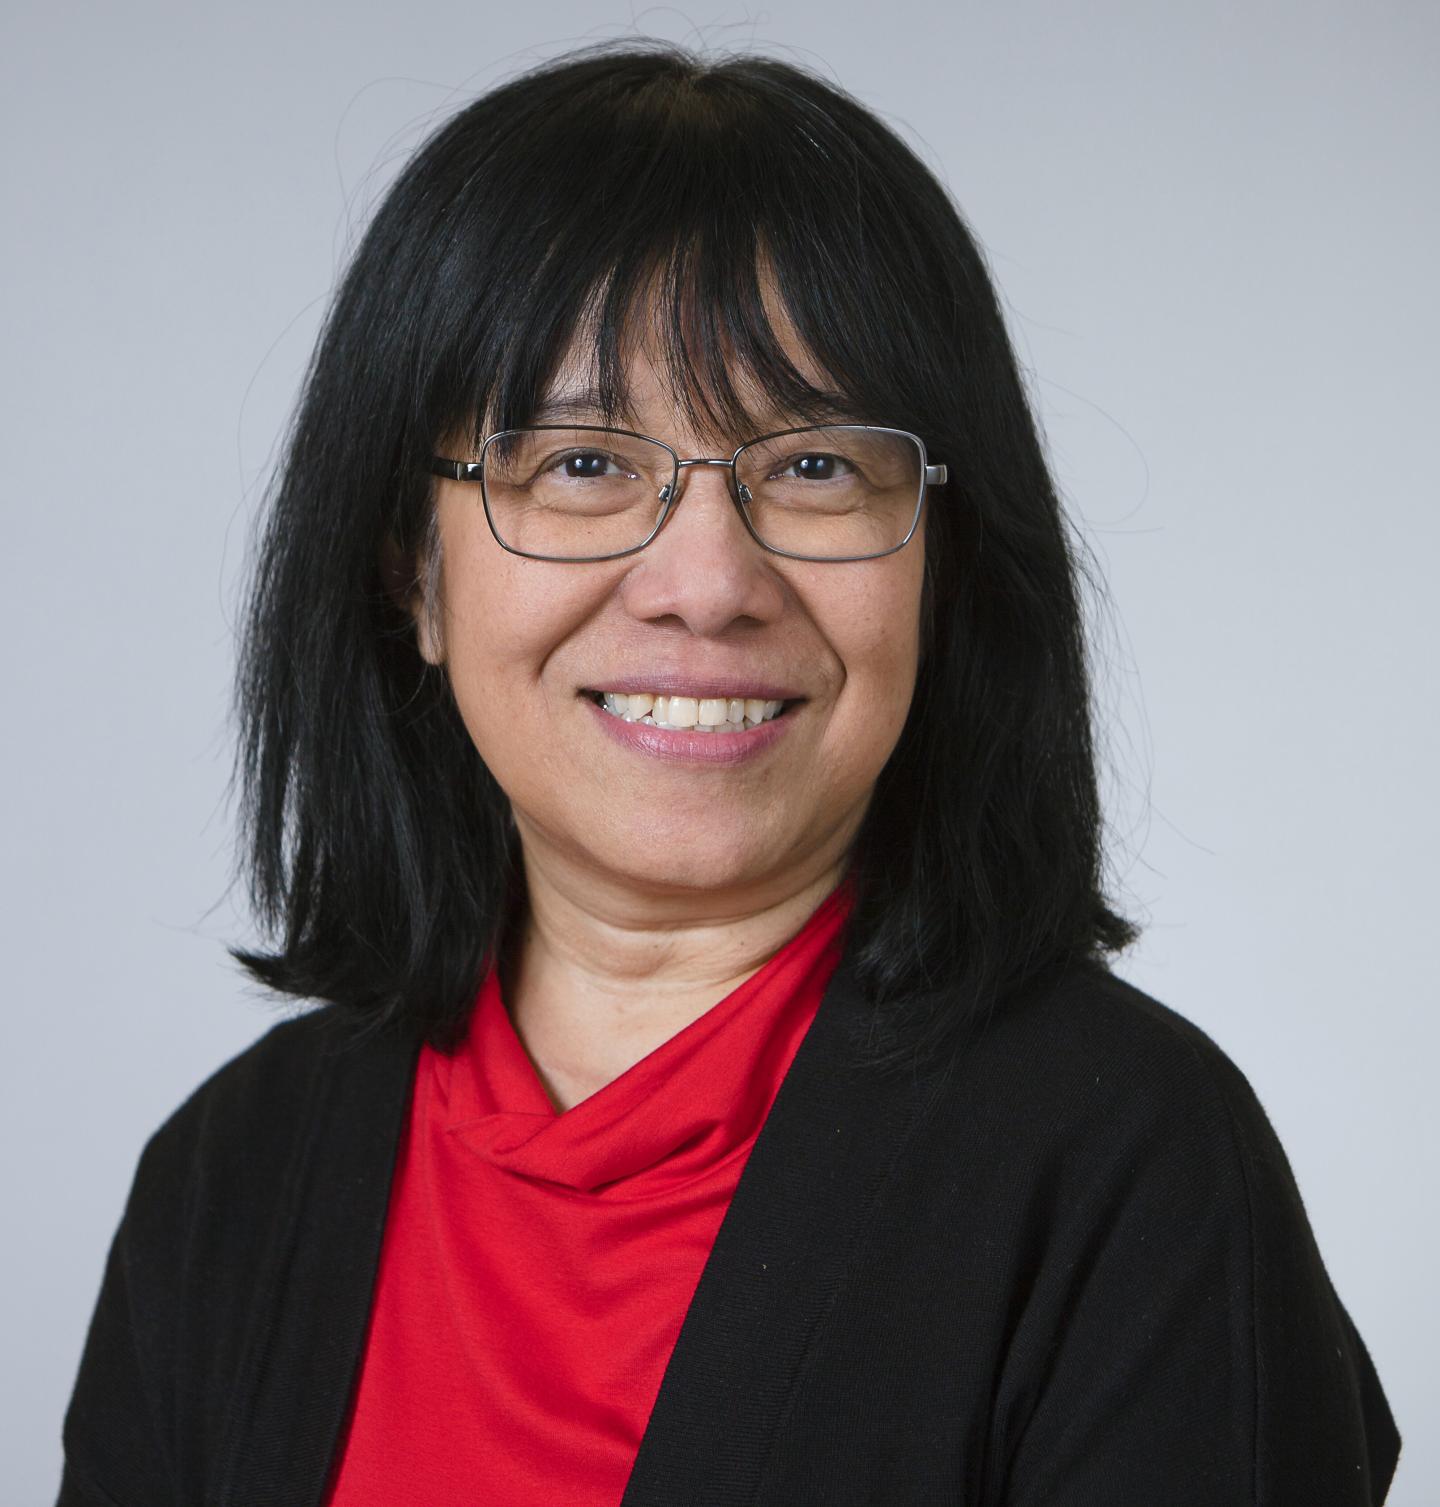 Professor Sun Nyunt Wai